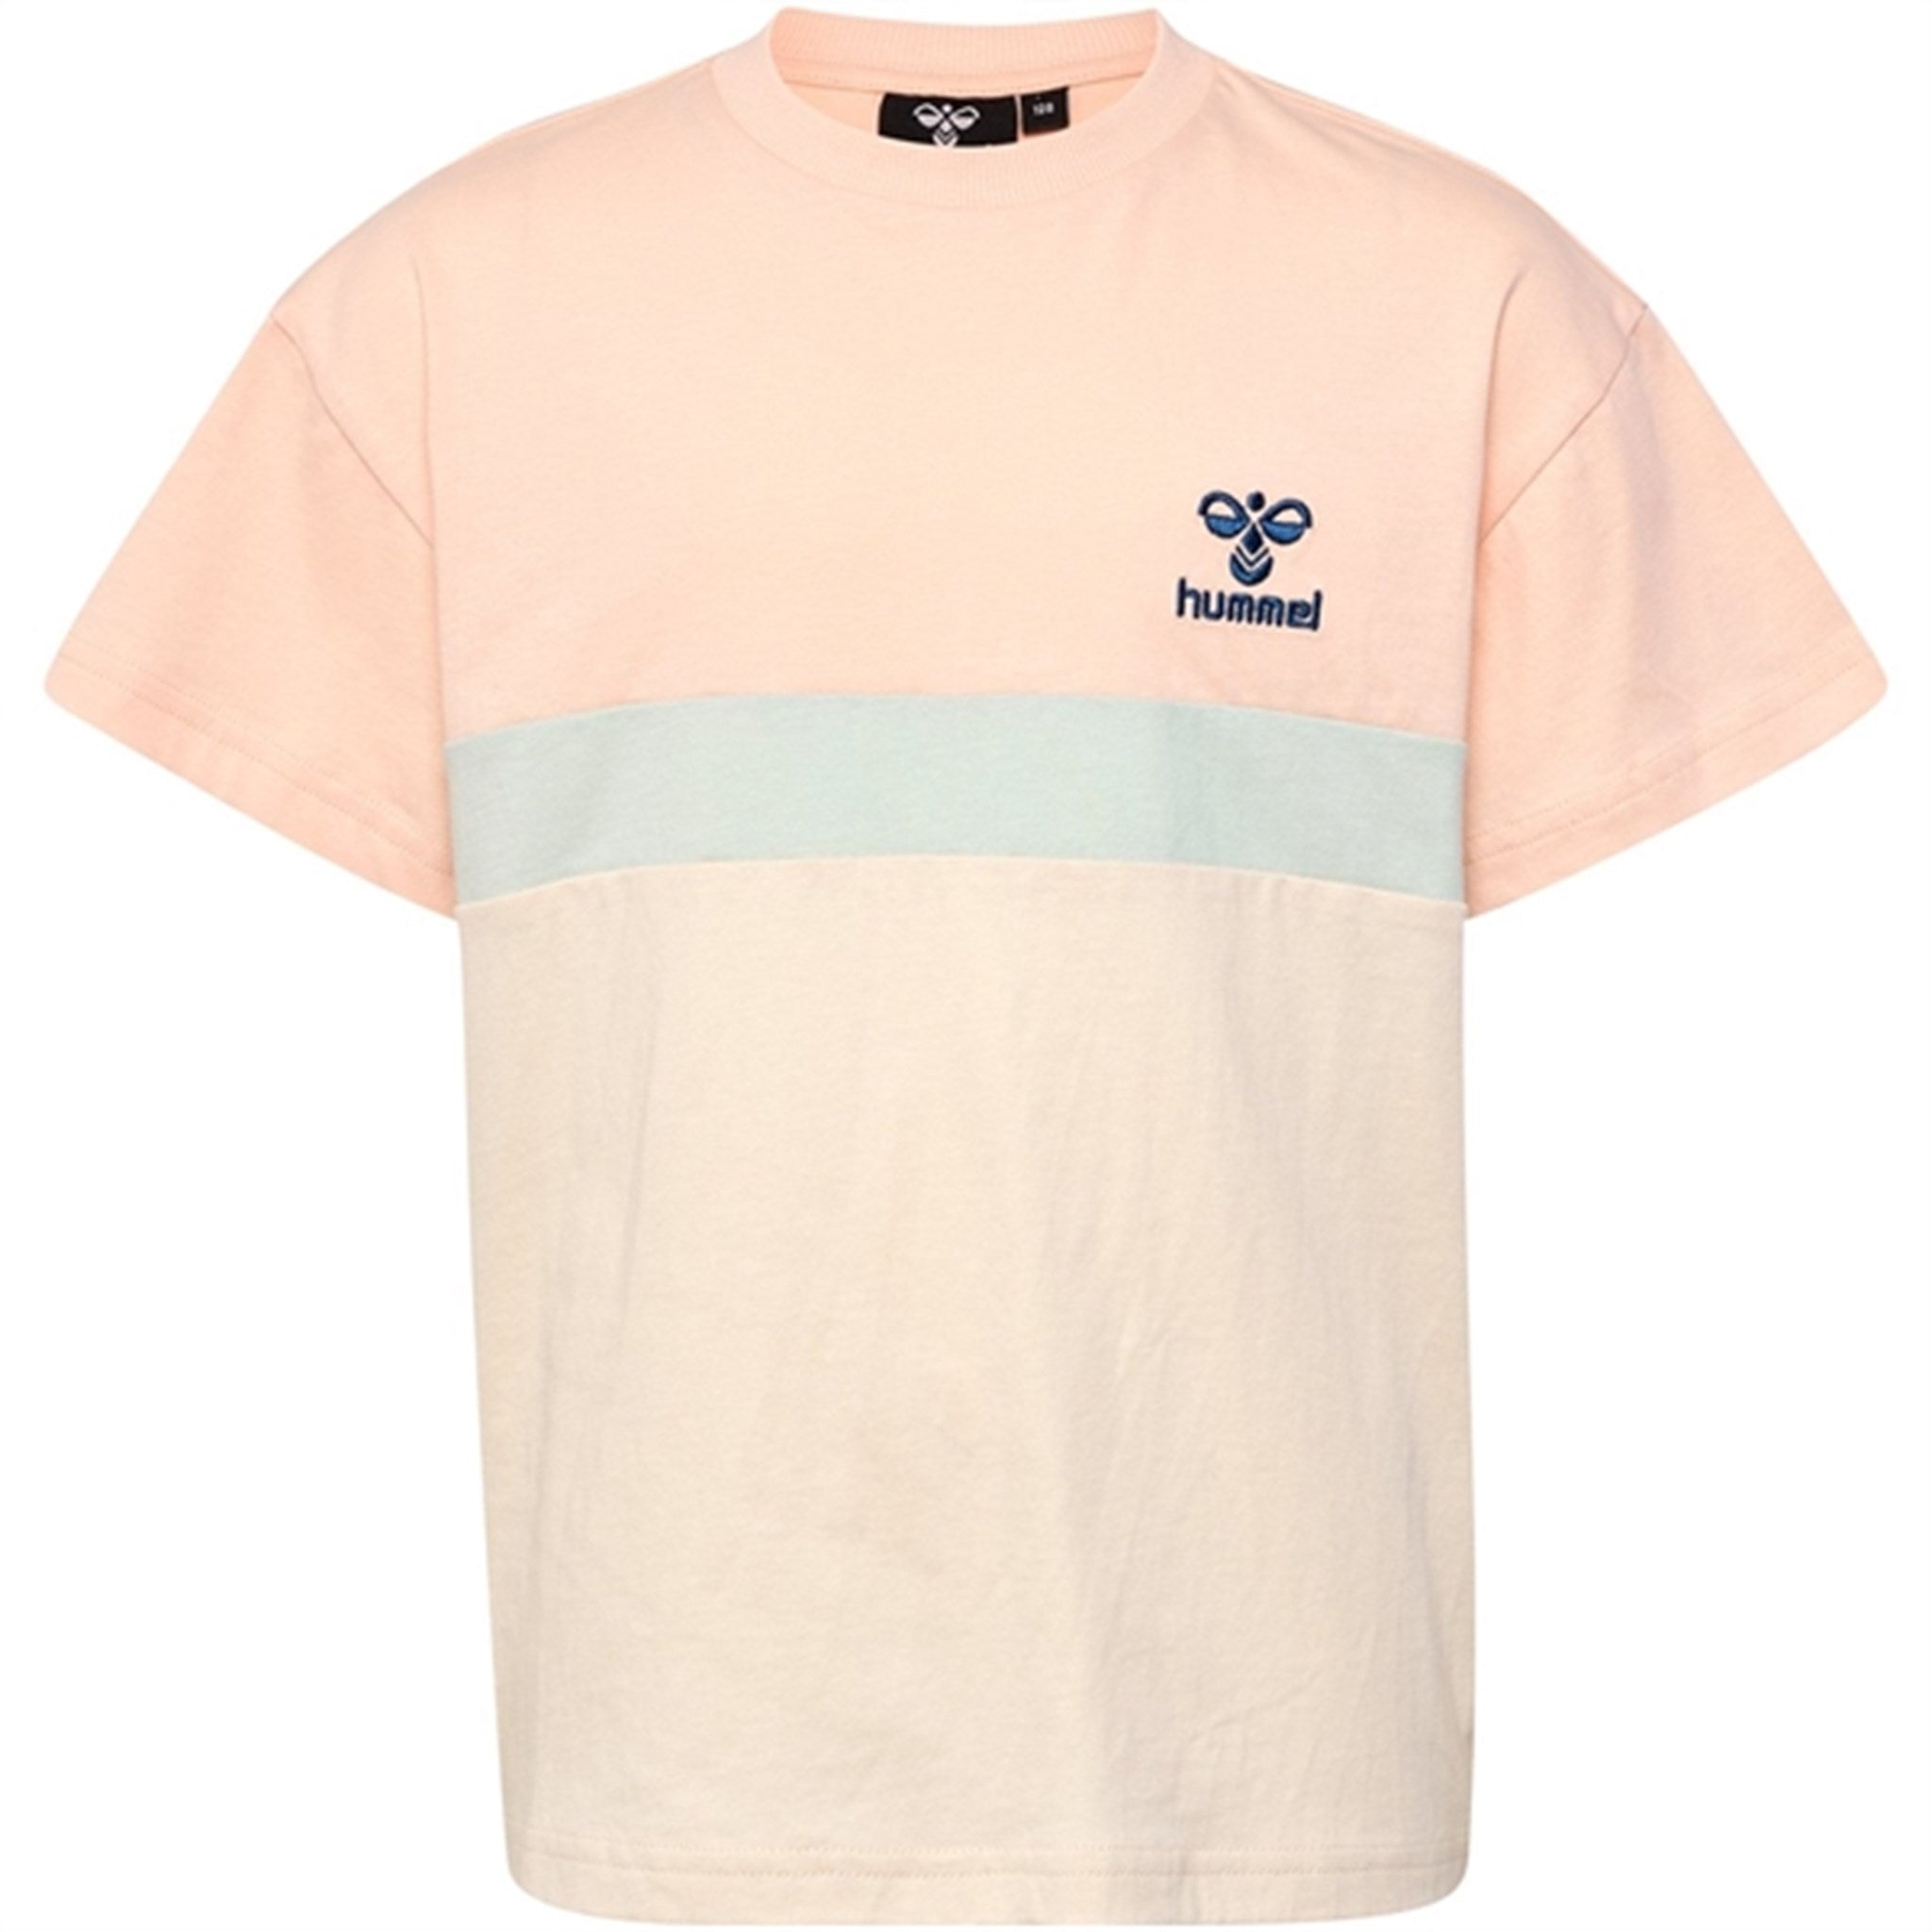 Hummel Peach Parfait Zoe Boxy T-Shirt